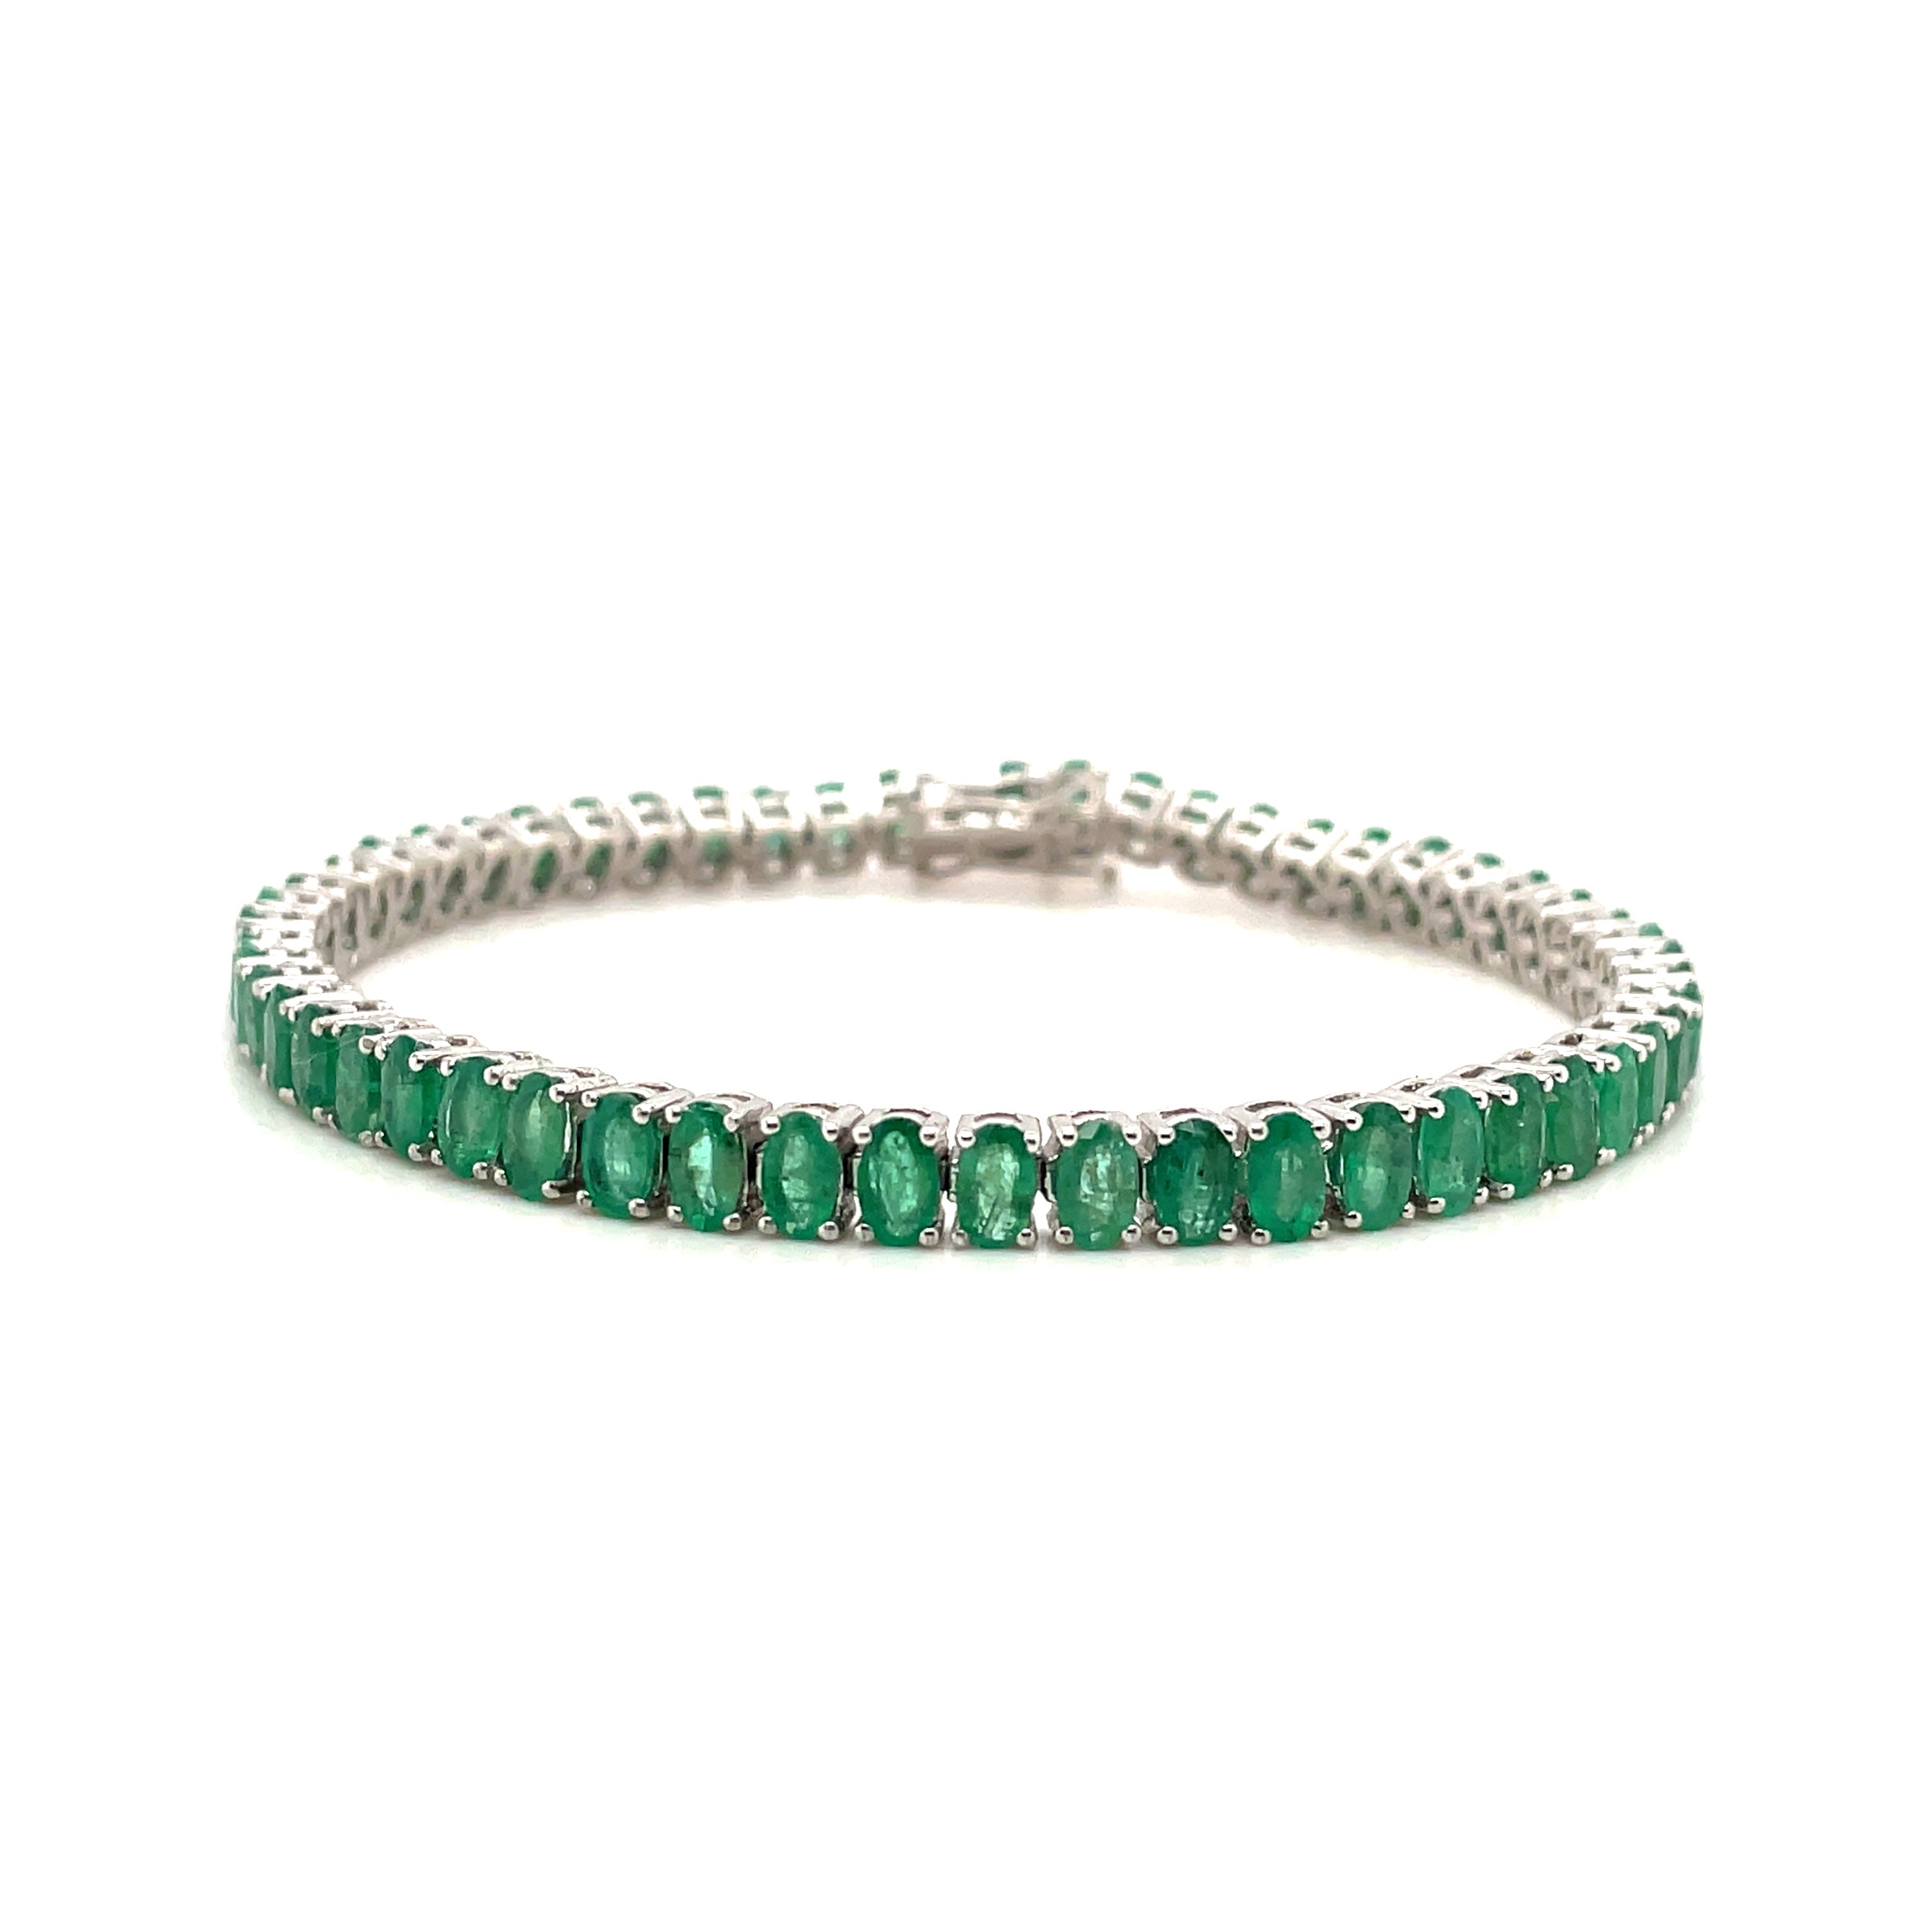 Buy Indian Emerald Bracelet, 925 Sterling Silver Bracelet, Handmade Bracelet,  Oval Gemstone Bracelet, Faceted Emerald Bracelet, Gift for Her. Online in  India - Etsy